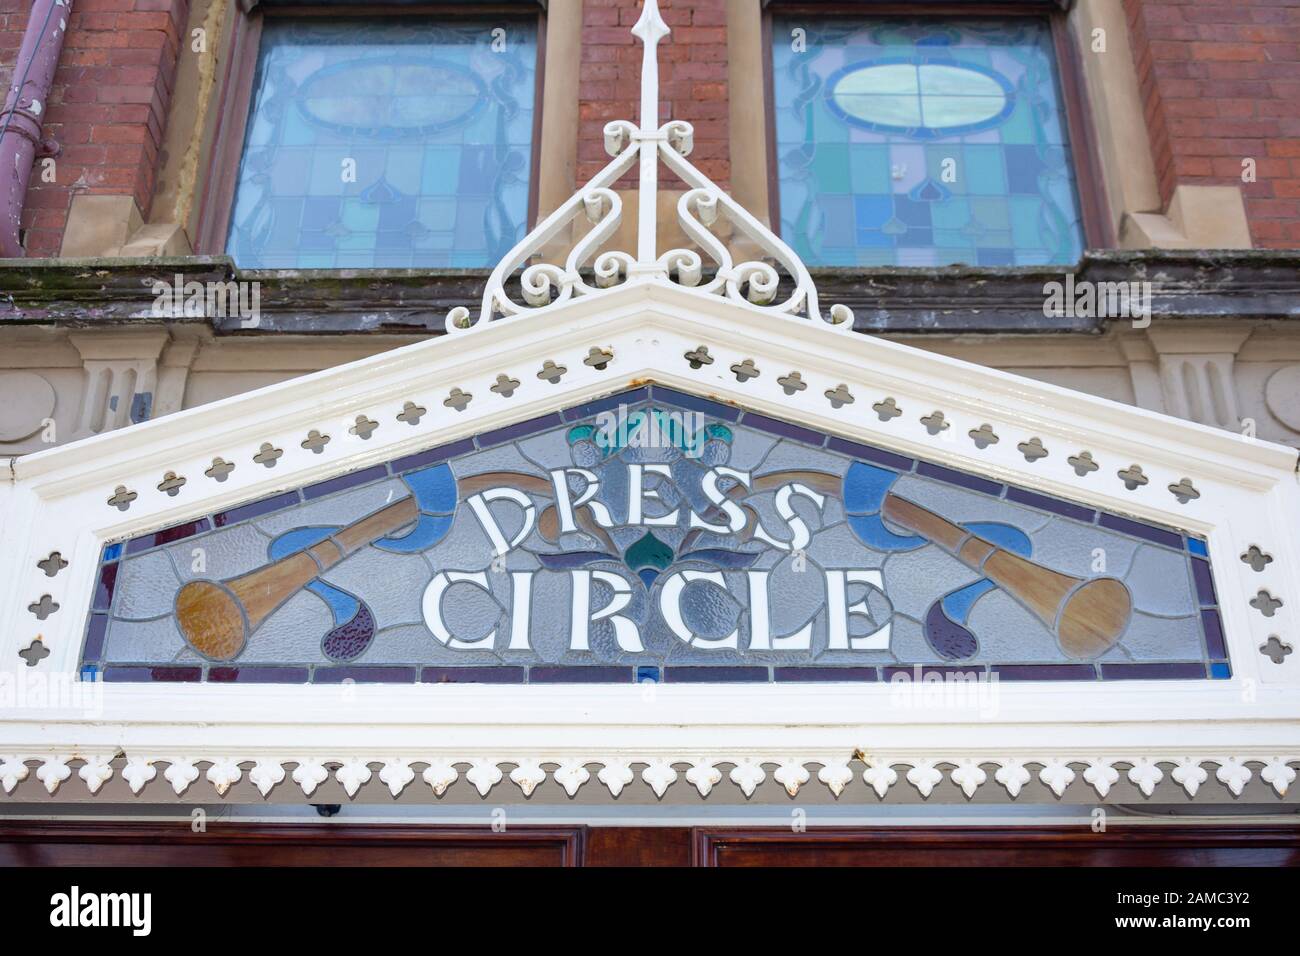 Dress Circle stained-glass sign, Grand Theatre, Church Street, Blackpool, Lancashire, England, United Kingdom Stock Photo